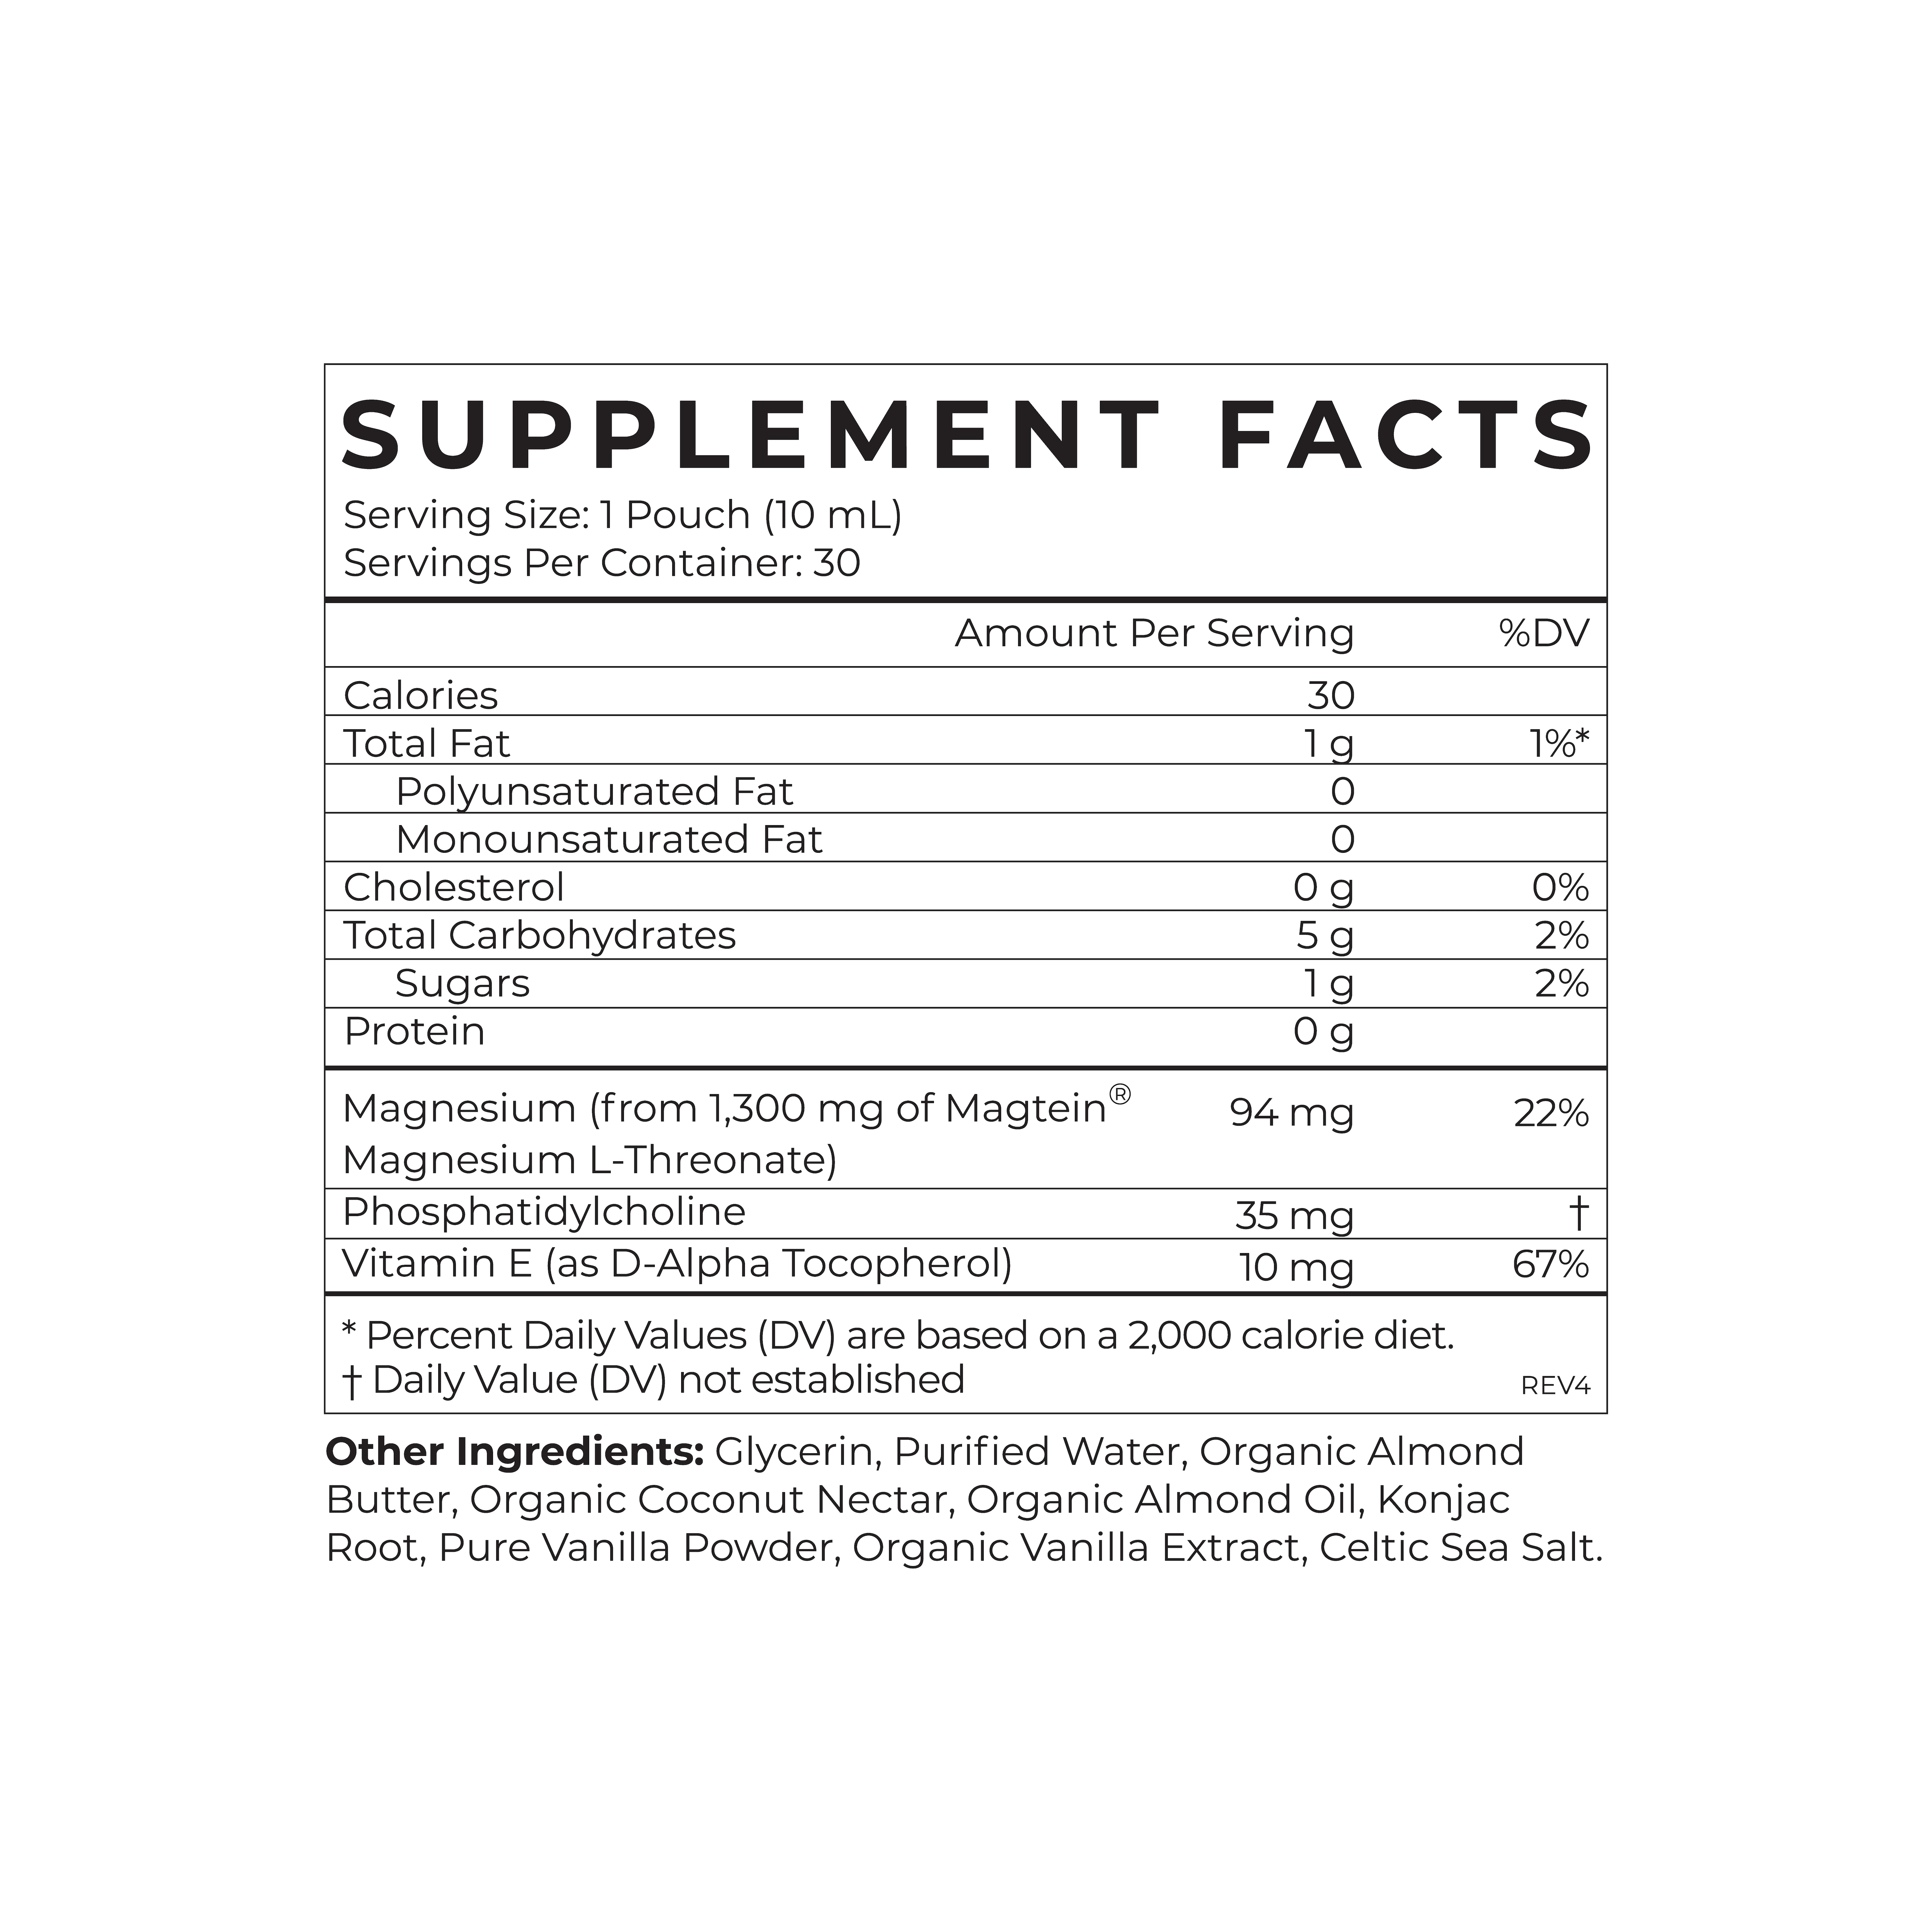 Magnesium L-Threonate Supplement Facts